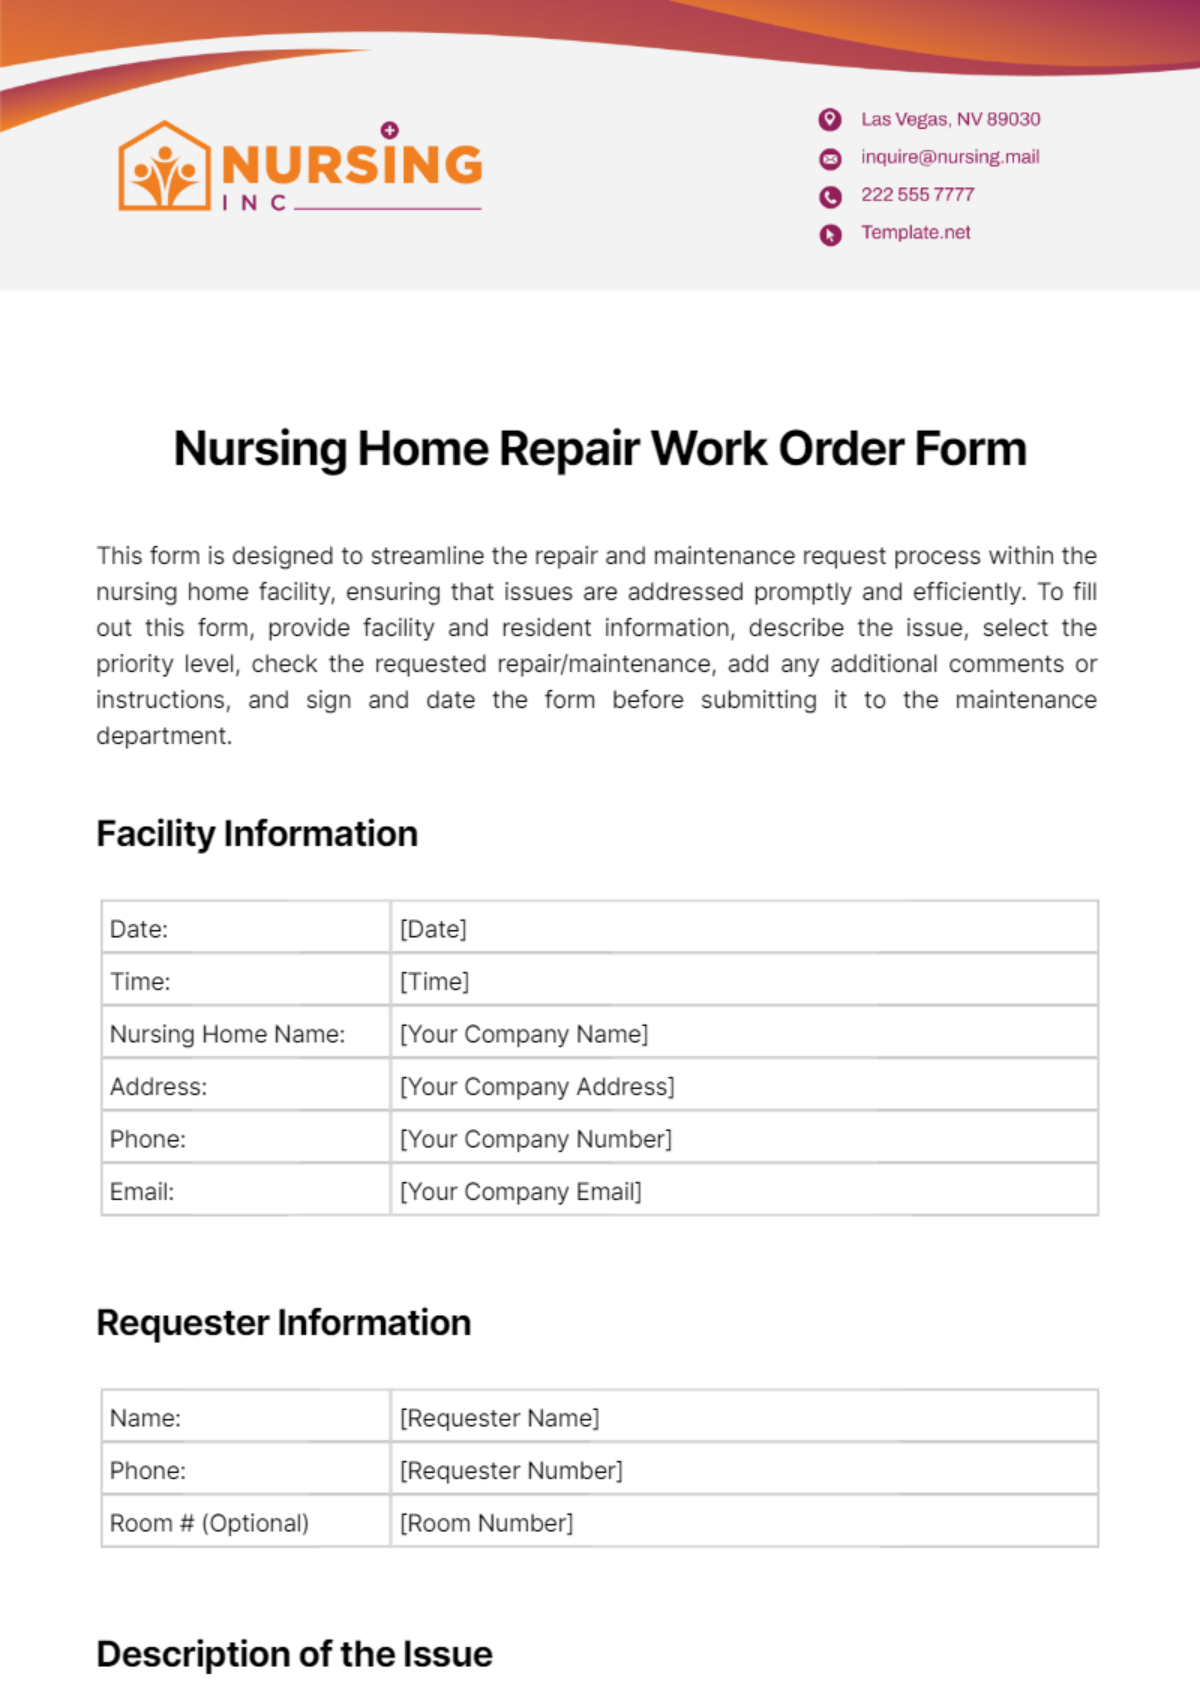 Nursing Home Repair Work Order Form Template